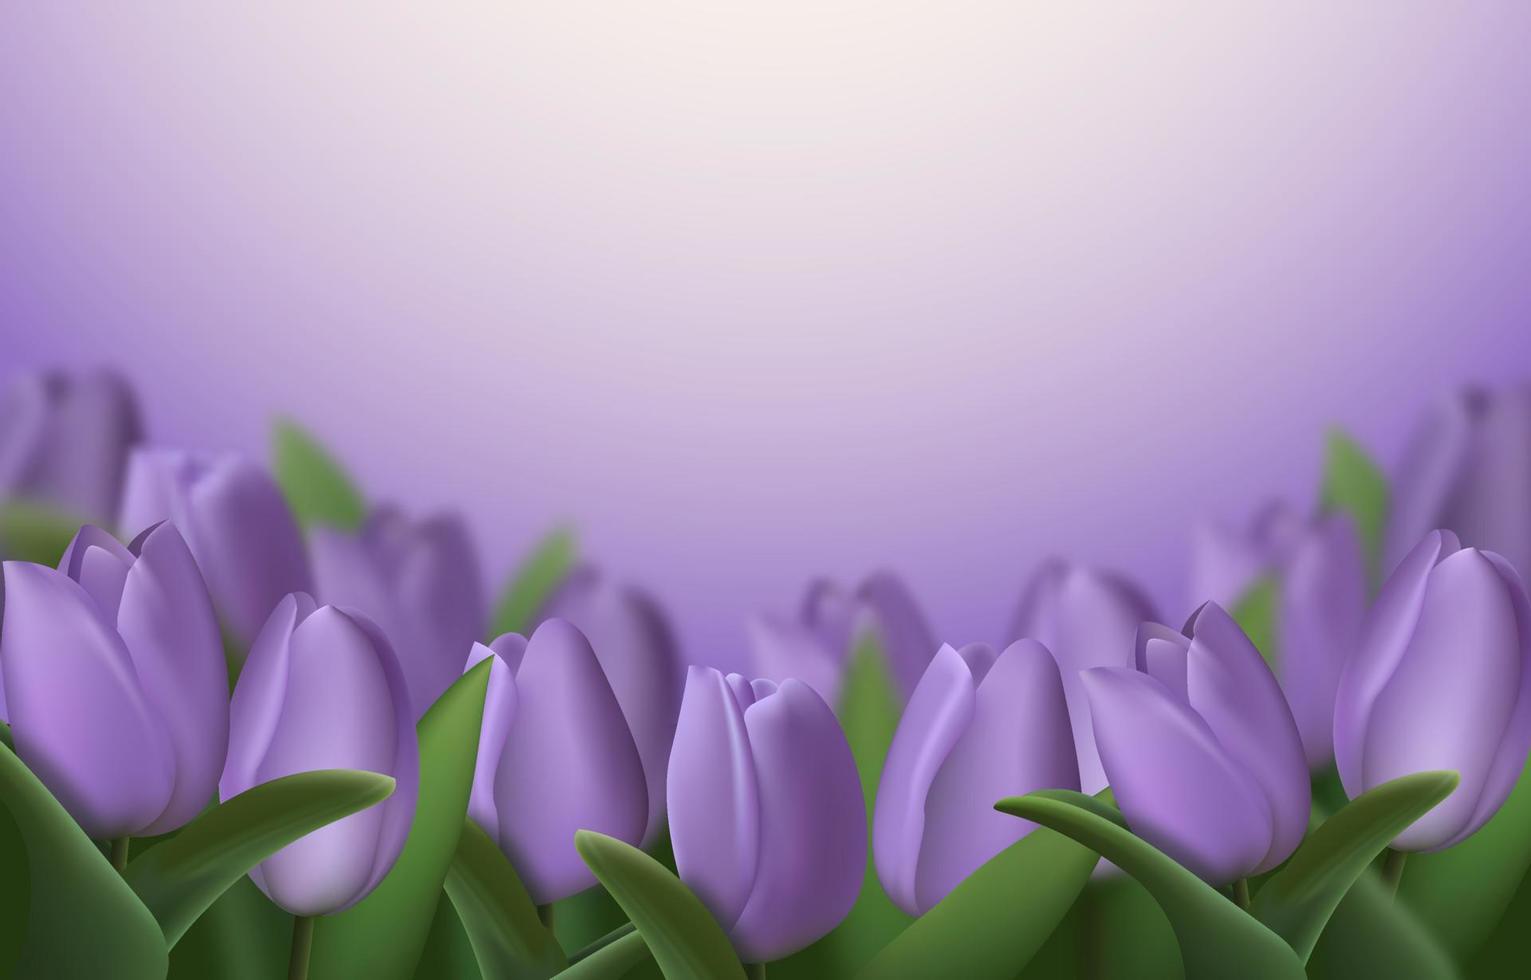 Realistic 3d tulip flowers on purple background. Vector illustration